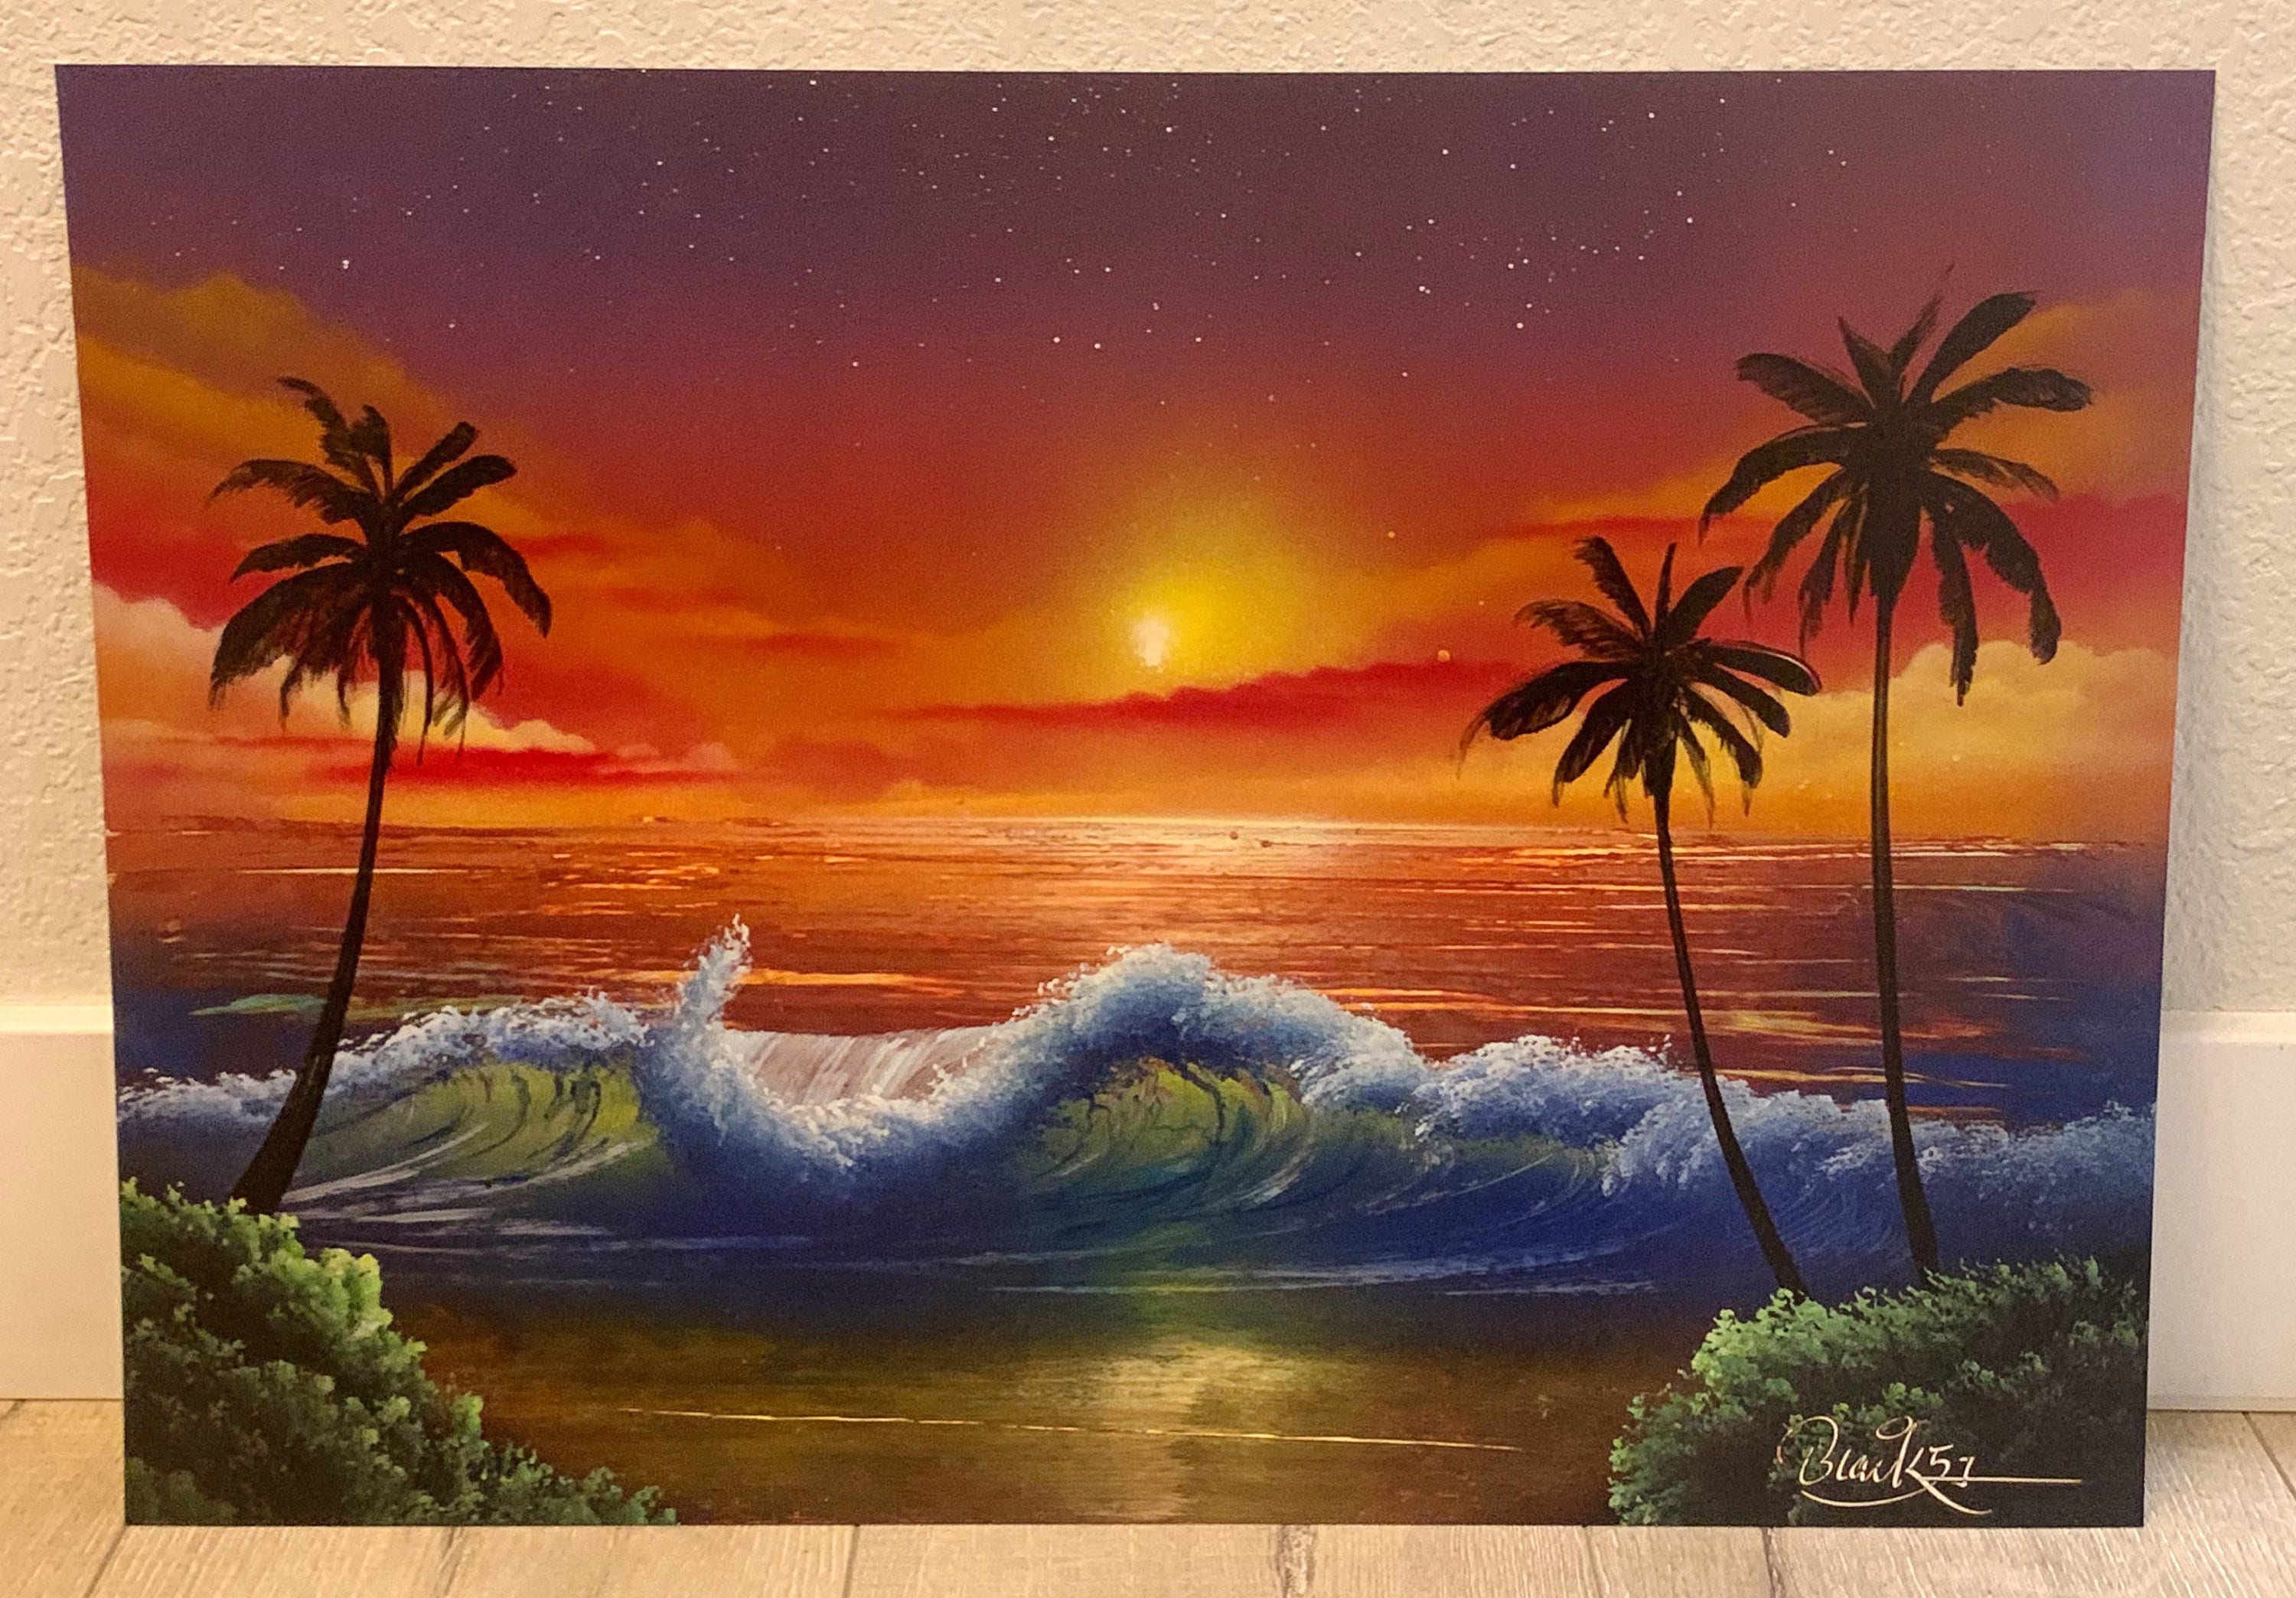 Painted Rocks Palm Trees Silhouette Beach Decor Sunset Sunrise Painting 